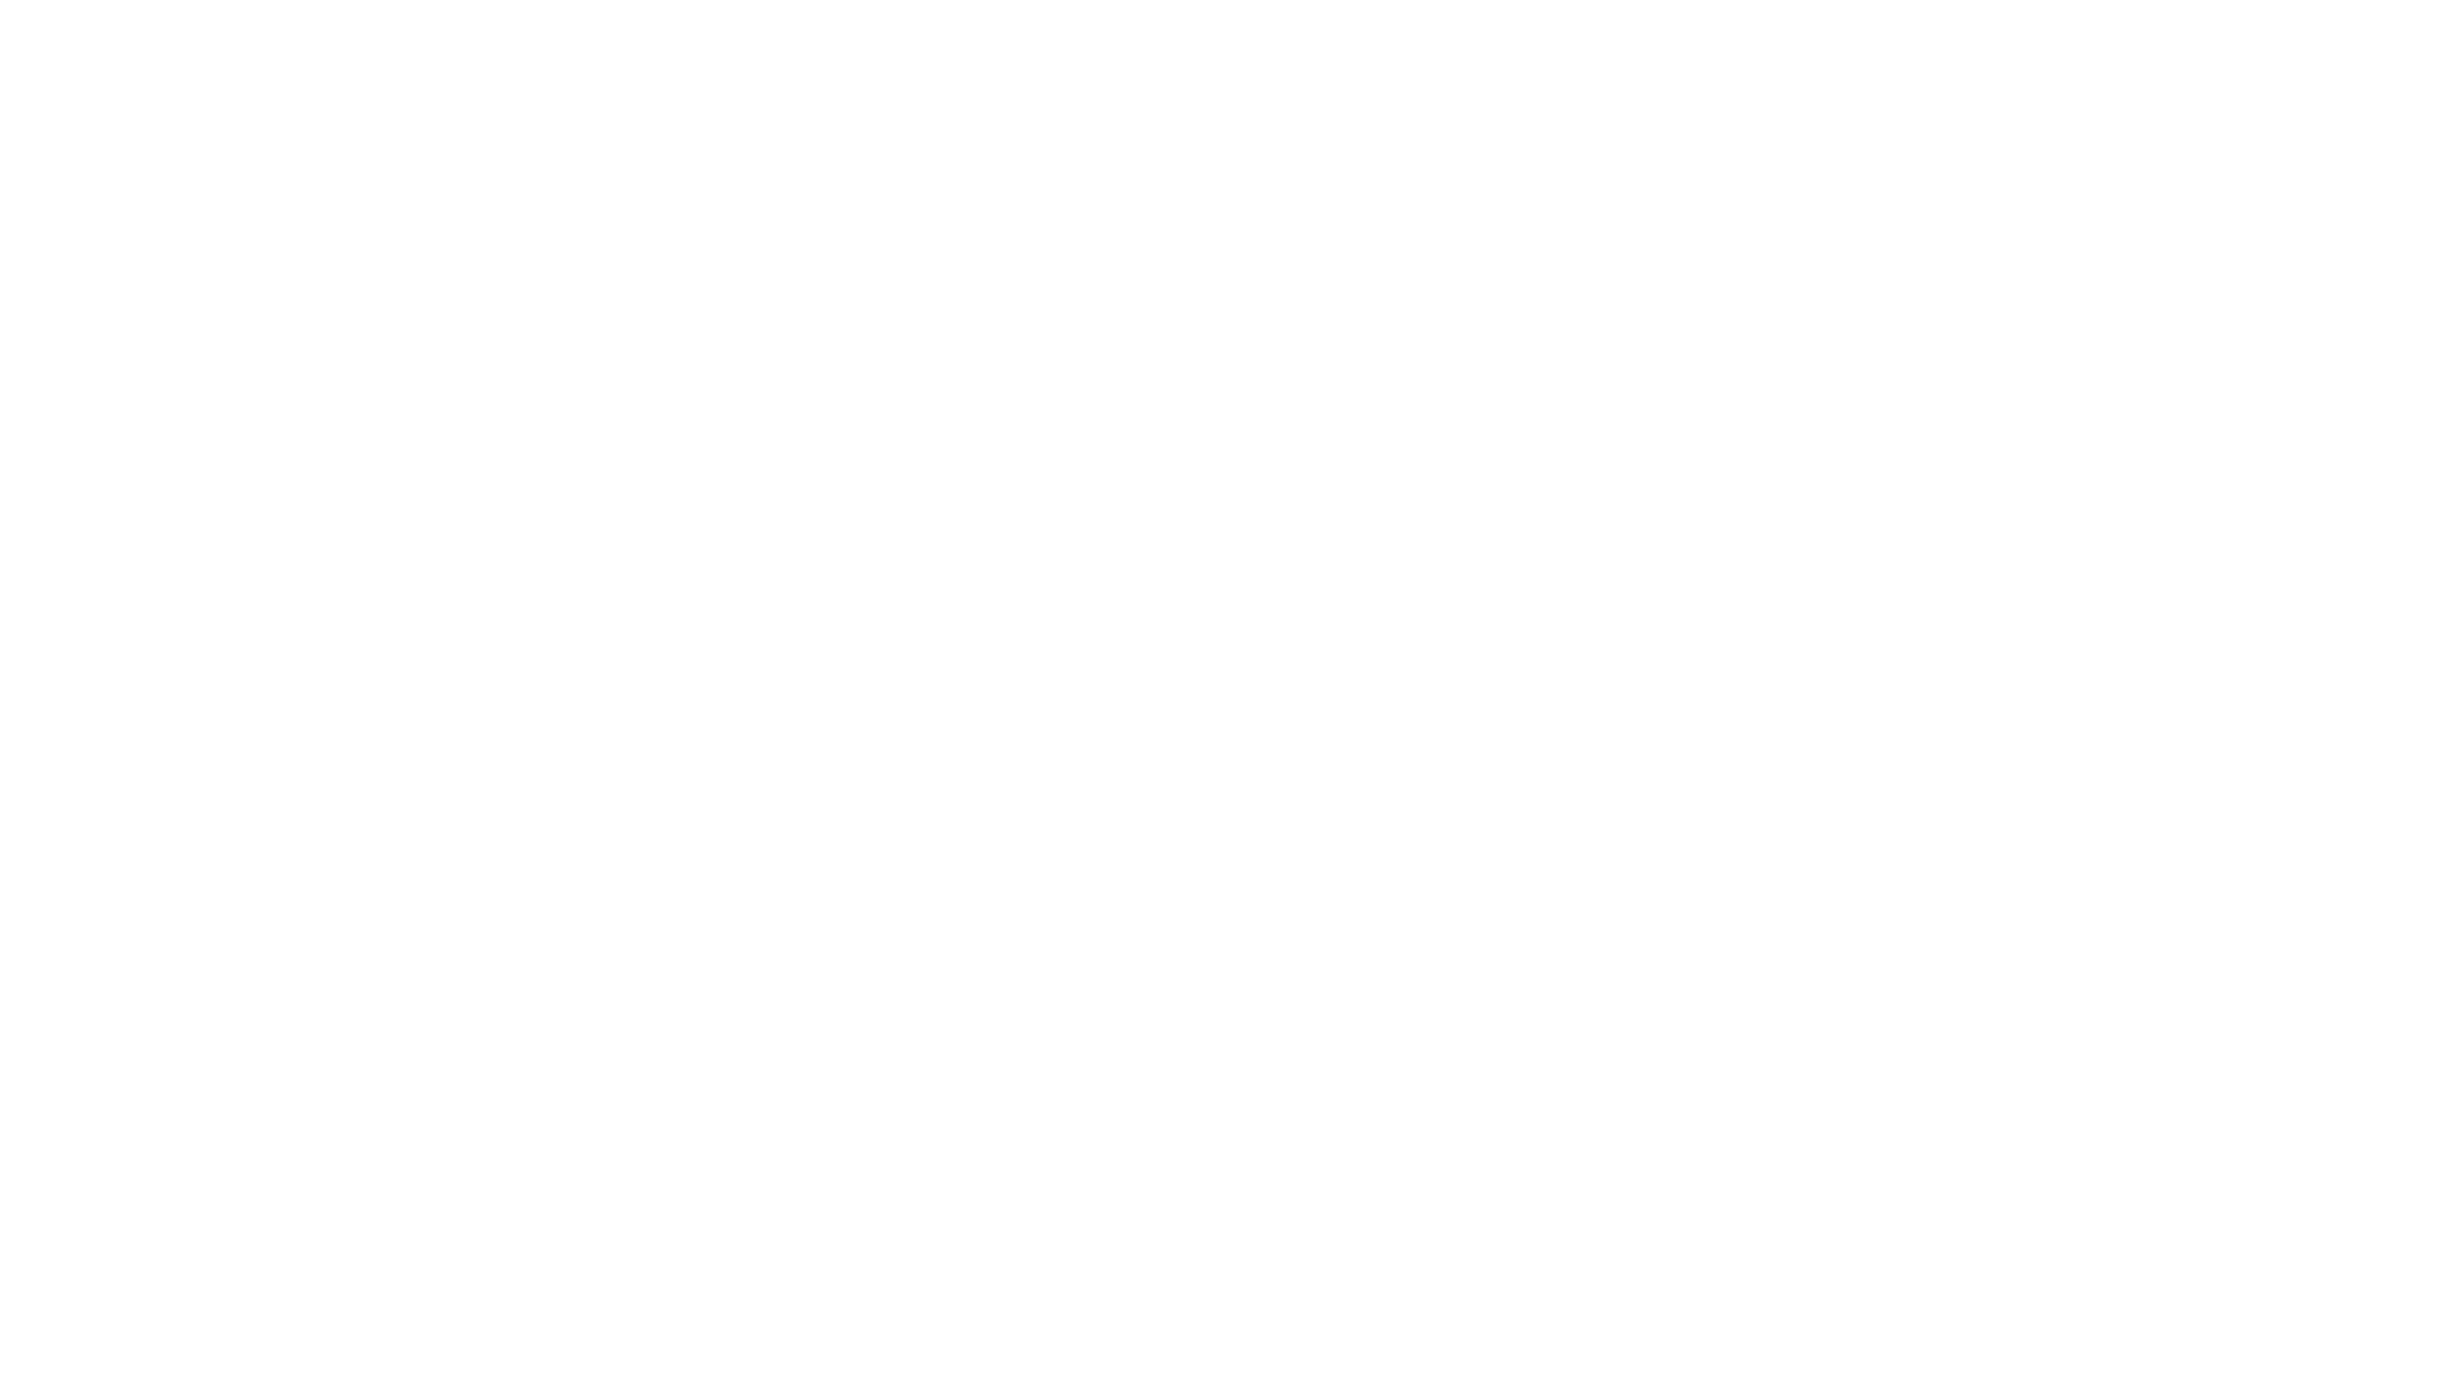 Brush Valley Floral Rebersburg Pa